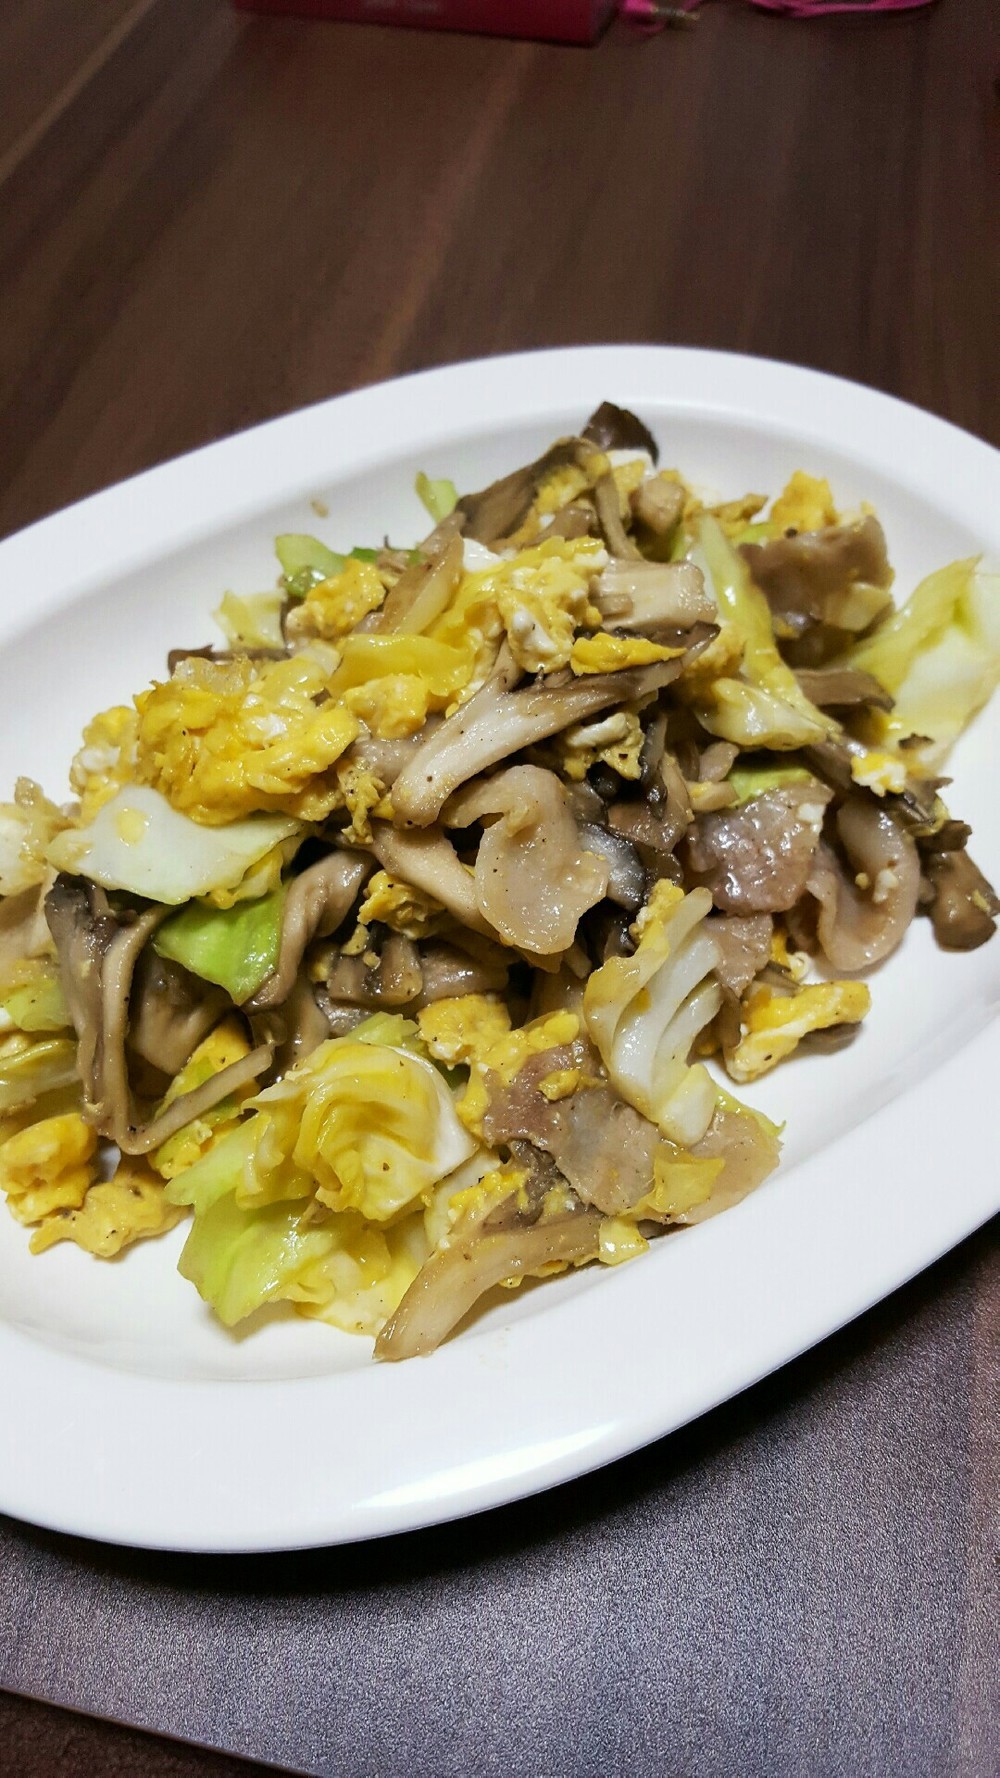 Stir-fried maitake mushrooms and eggs